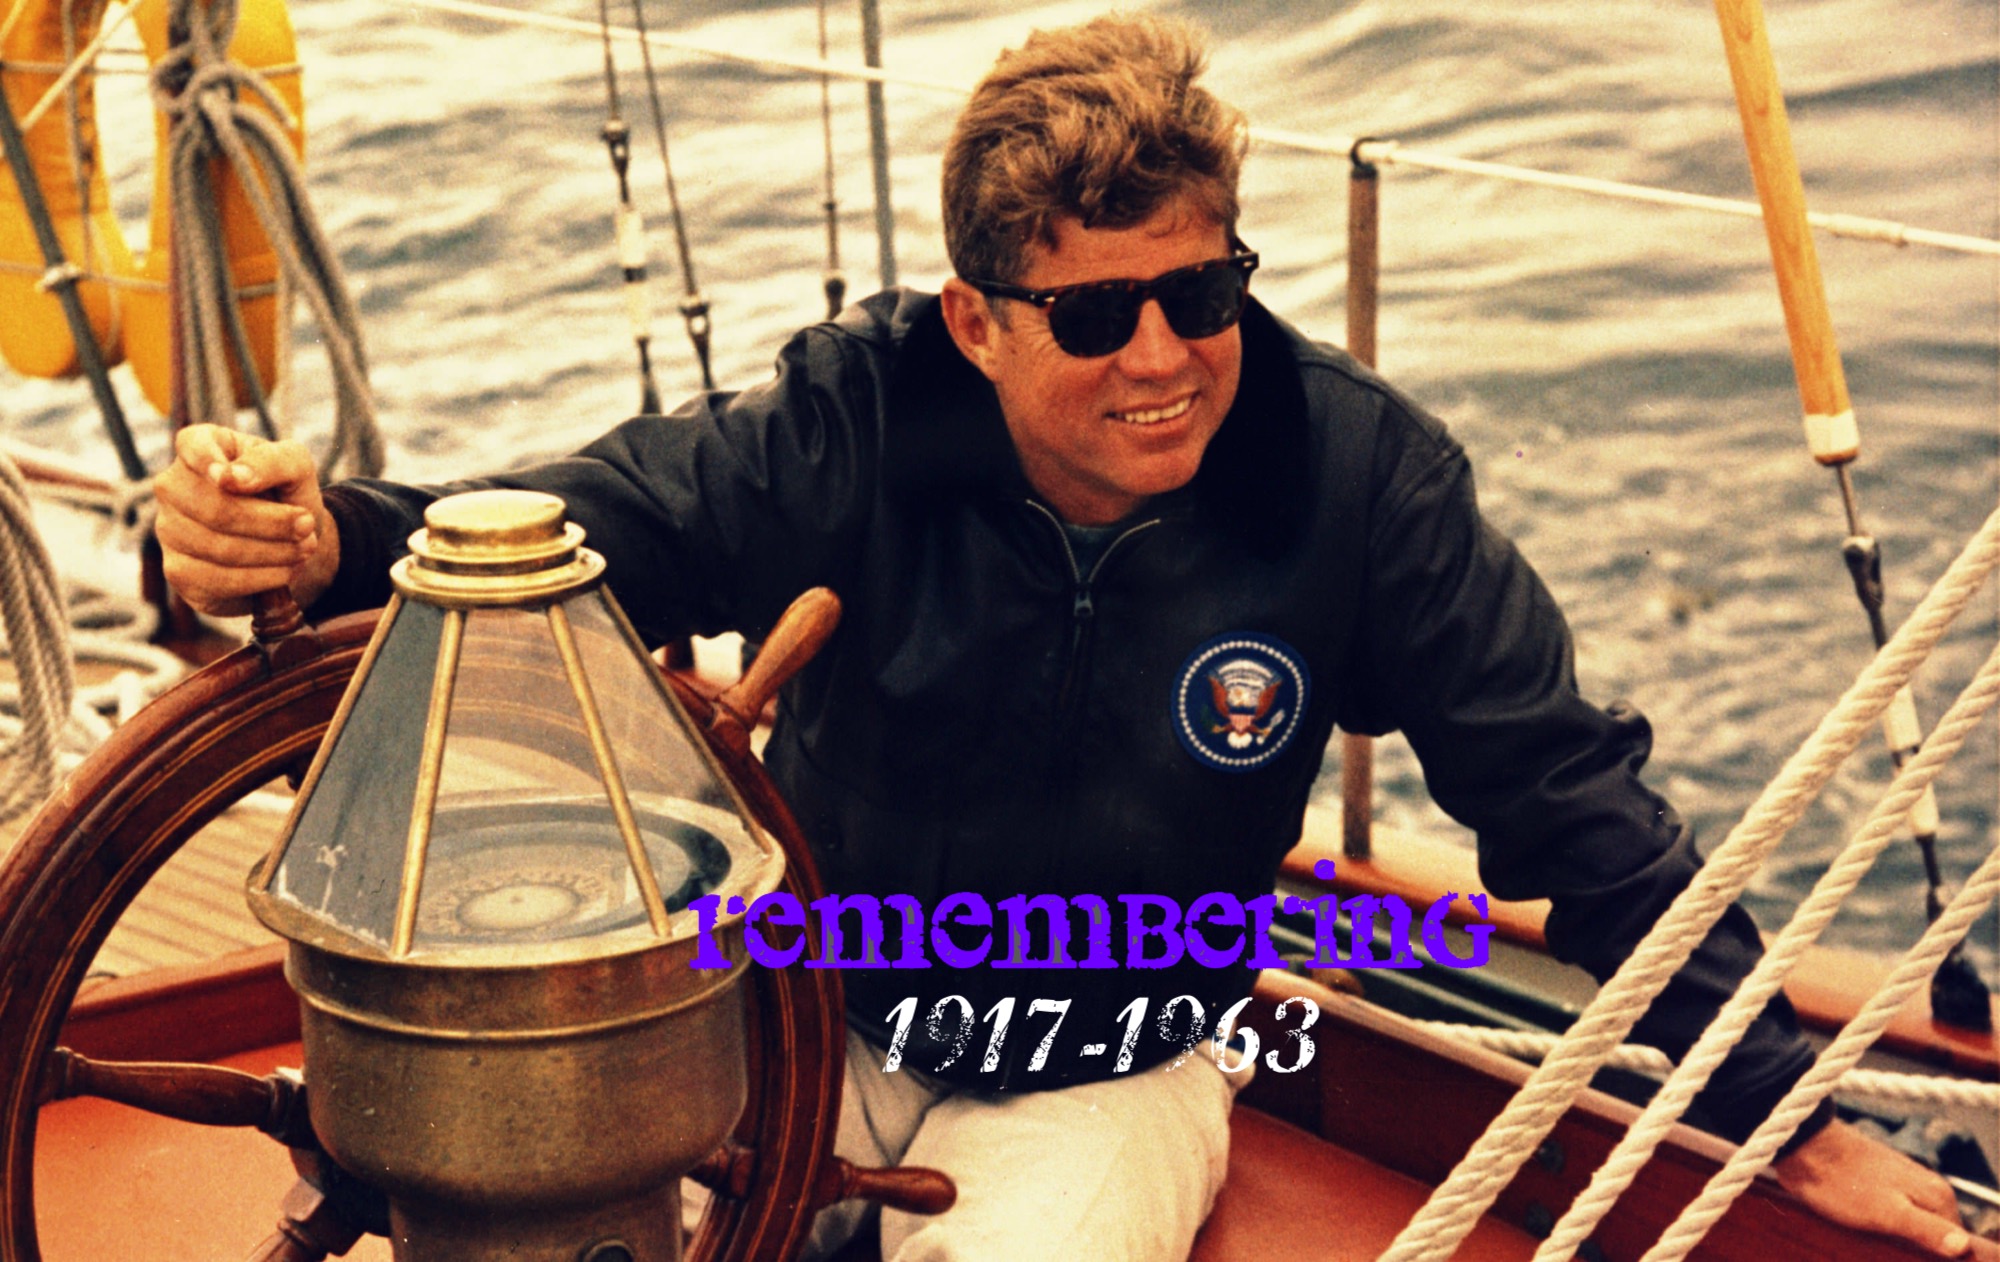 JFK remembered